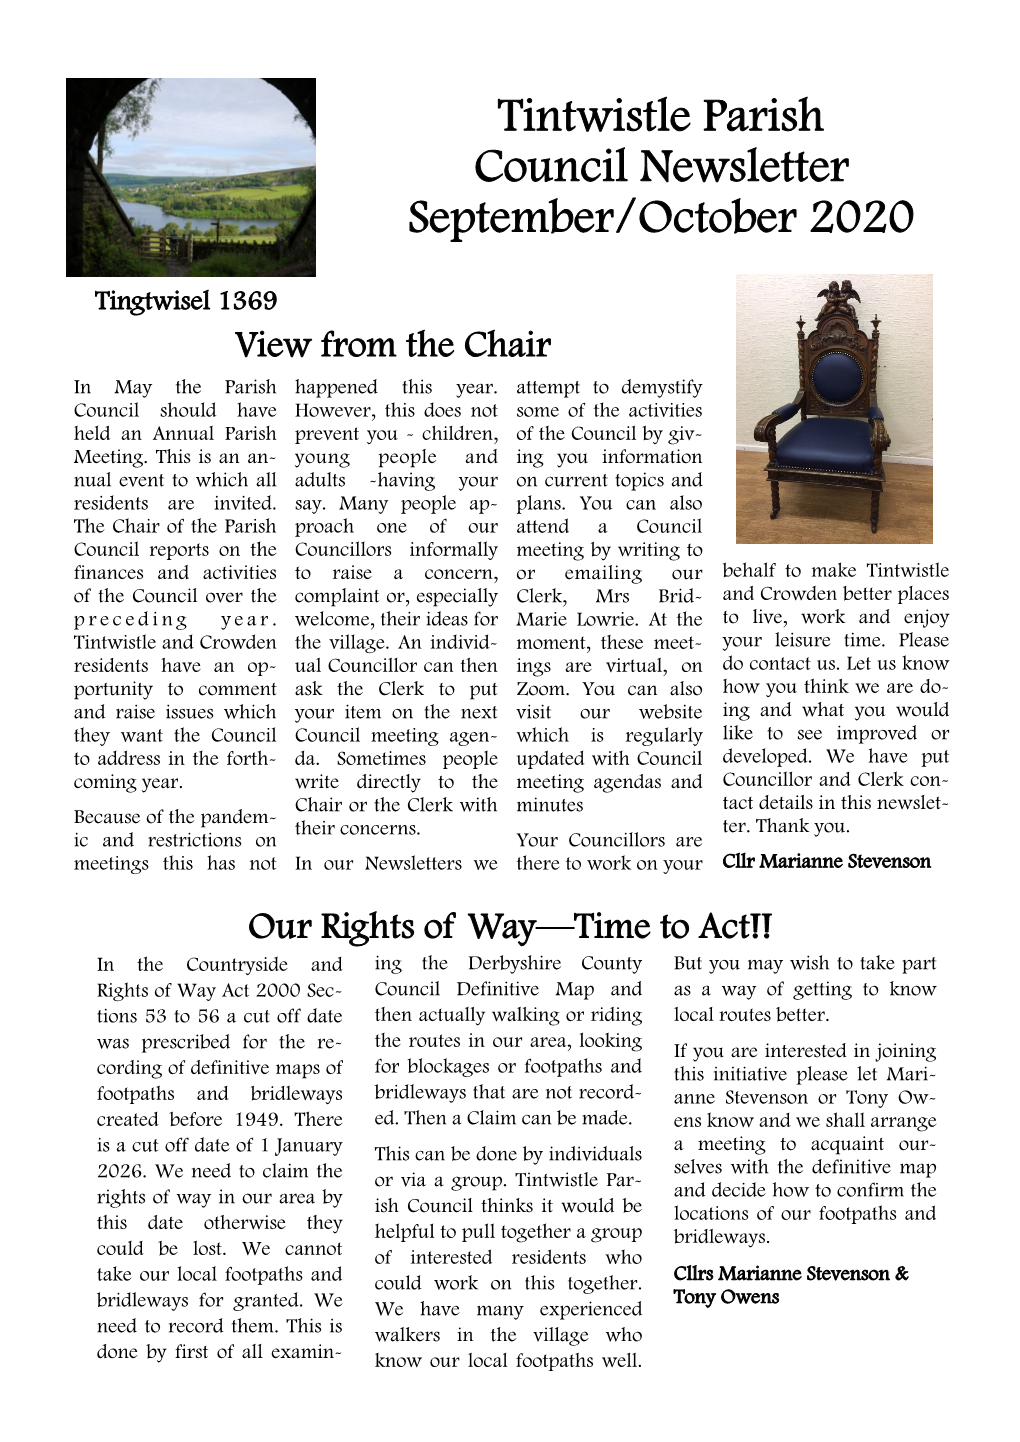 Tintwistle Parish Council Newsletter September/October 2020